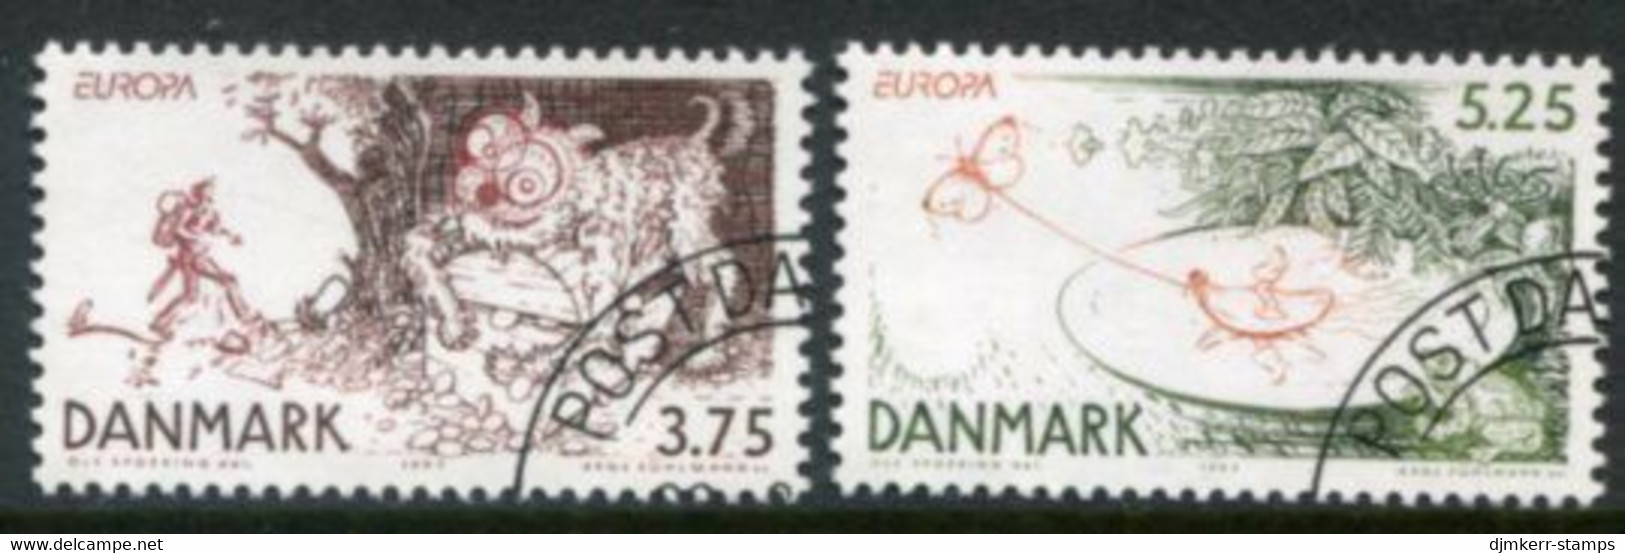 DENMARK 1997 Europa: Sagas And Legends Used.  Michel 1162-63 - Oblitérés